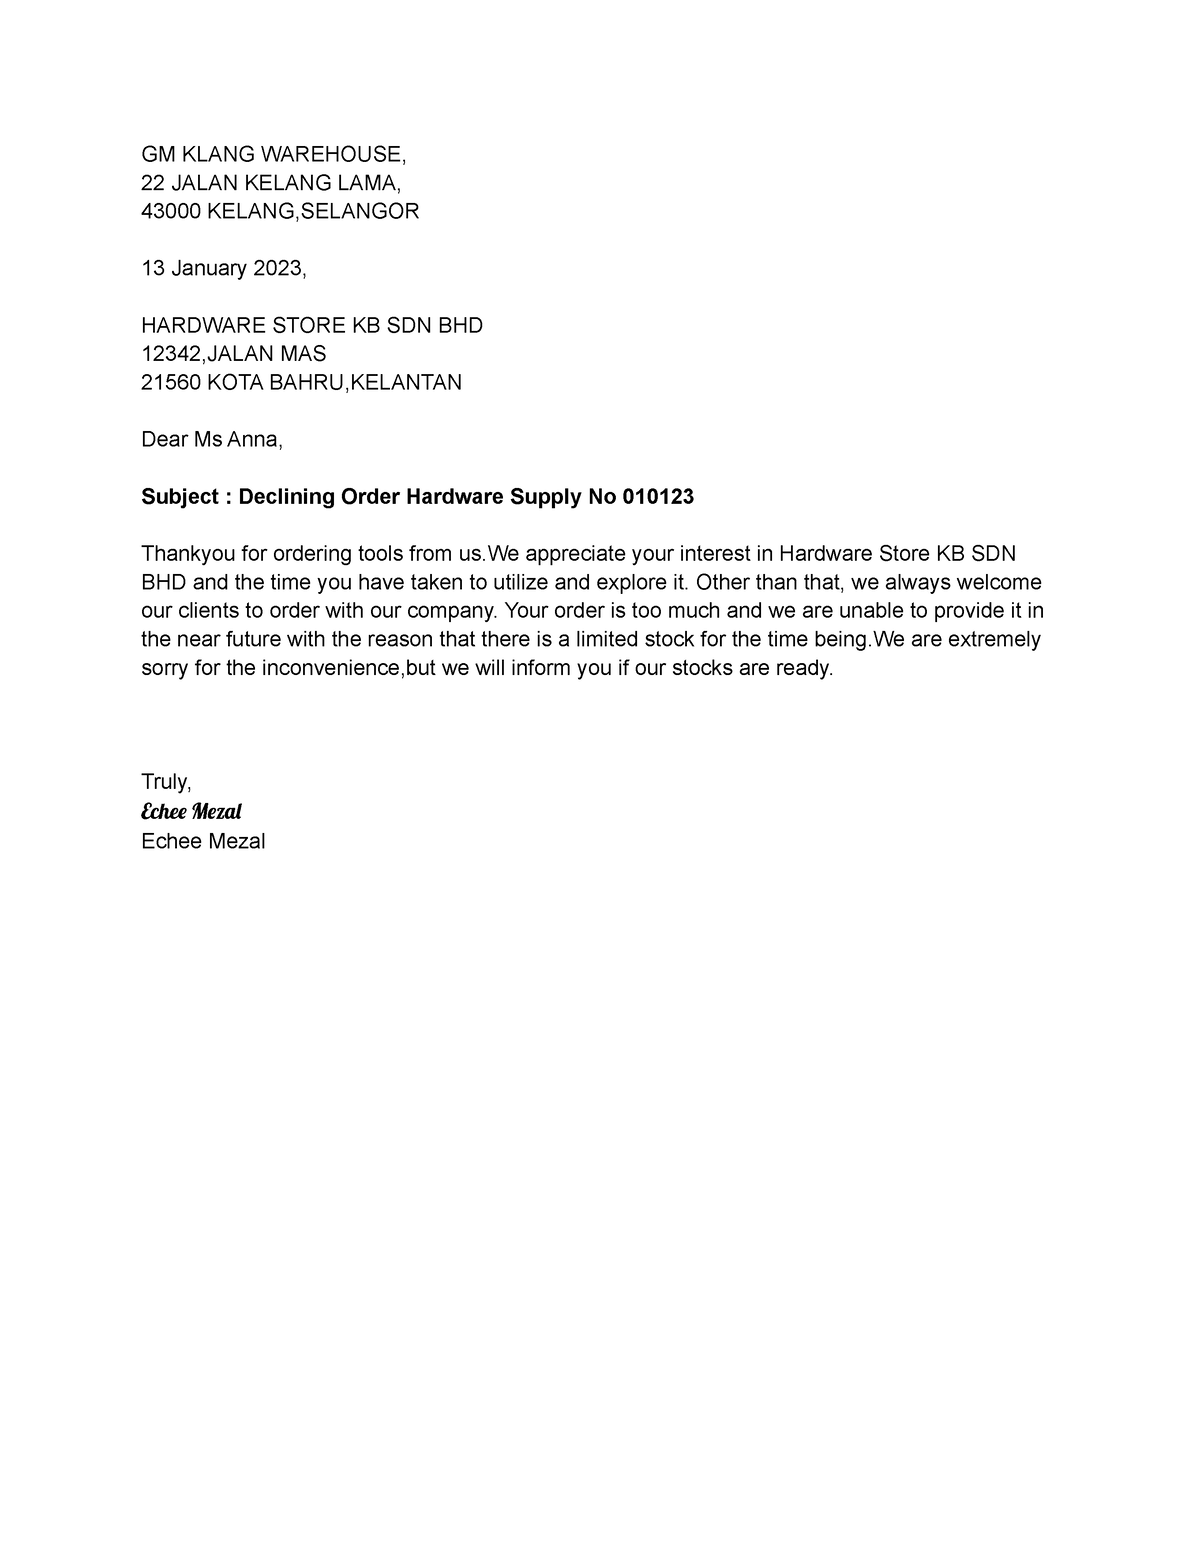 Declining Order Letter - GM KLANG WAREHOUSE, 22 JALAN KELANG LAMA ...